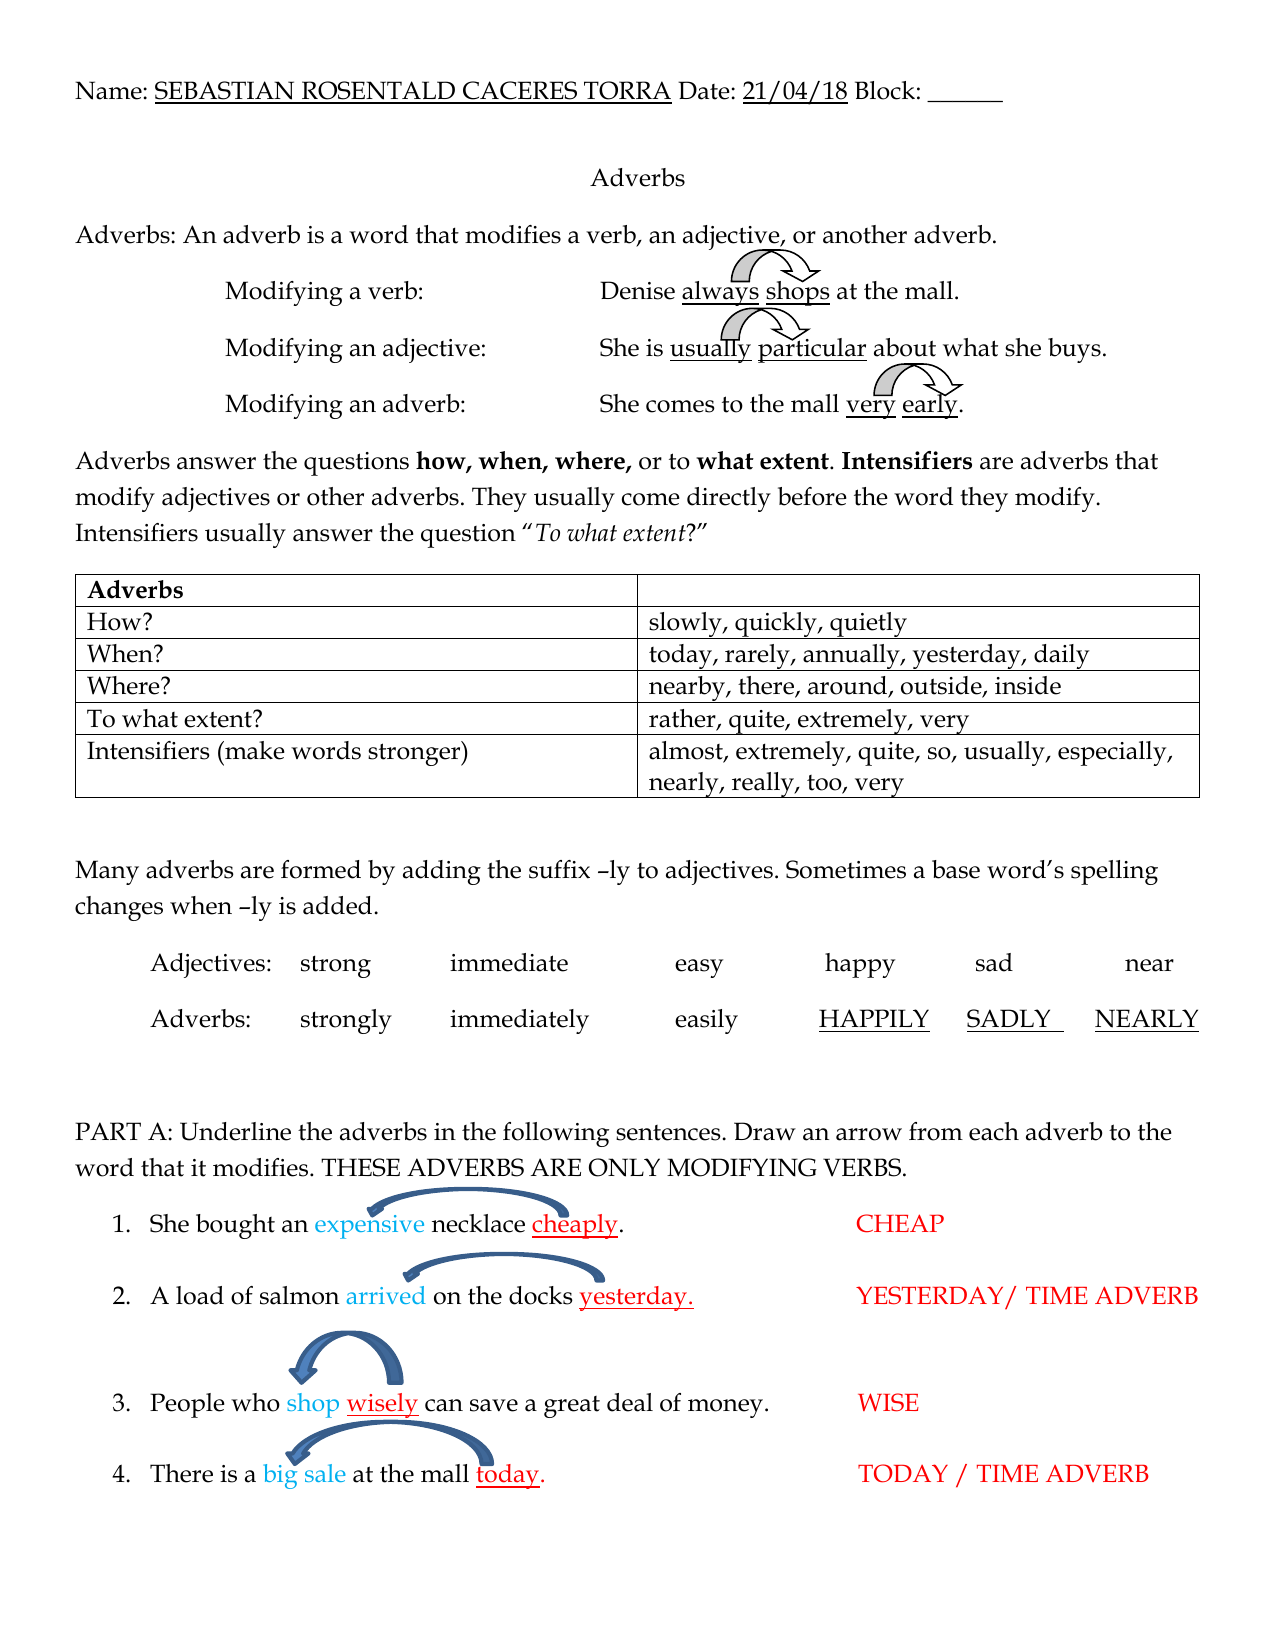 Adverbs Worksheet SRCT